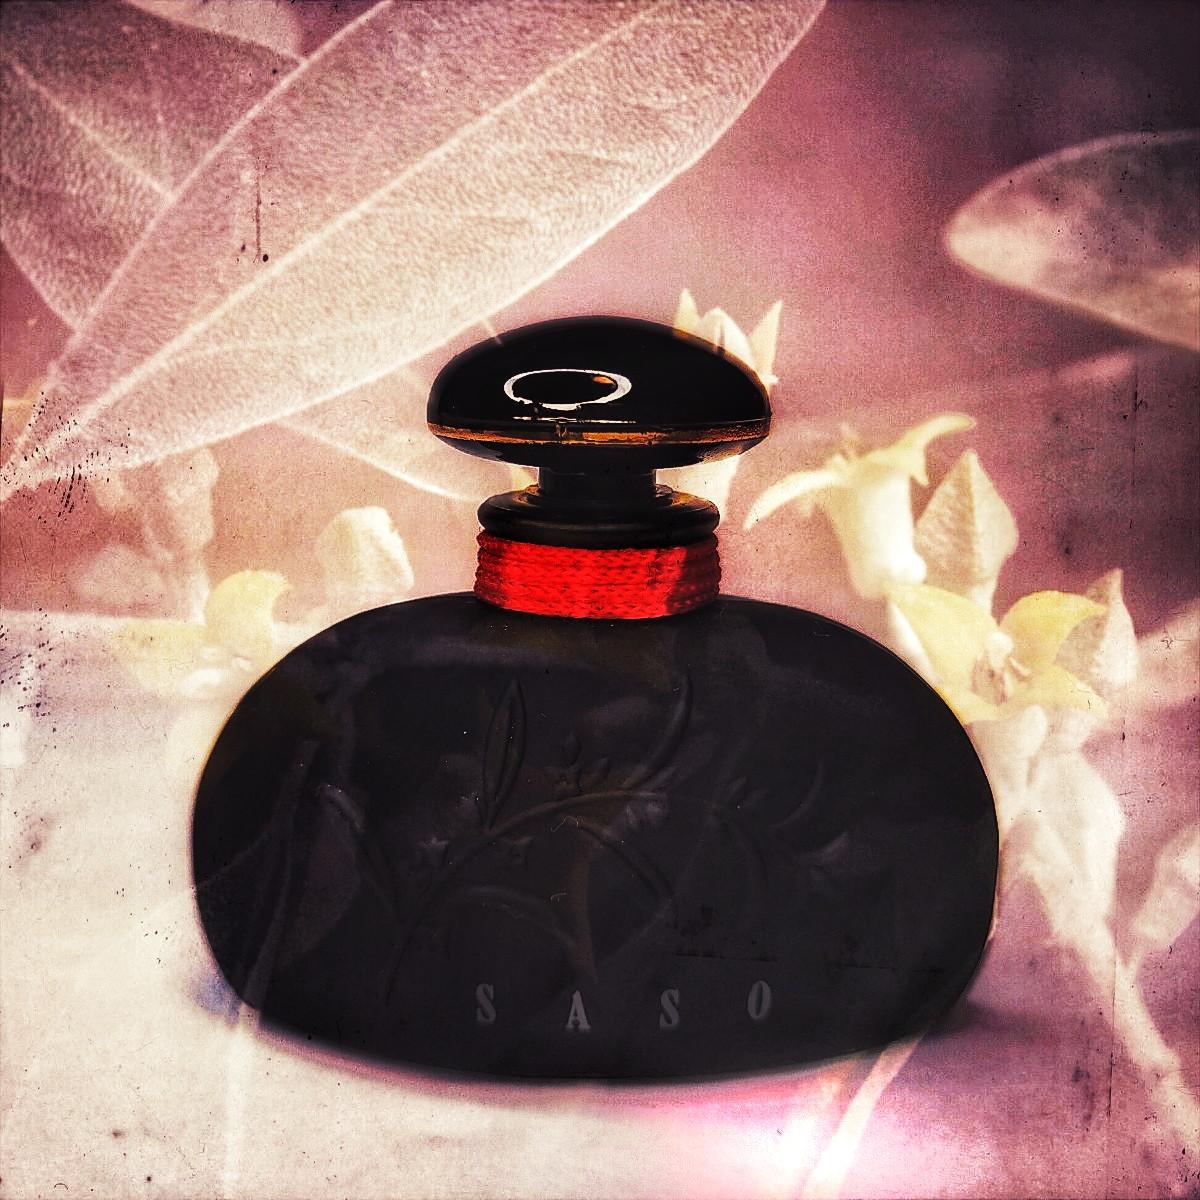 The bodyshop & Myth of saso perfume set+healthywave.co.uk